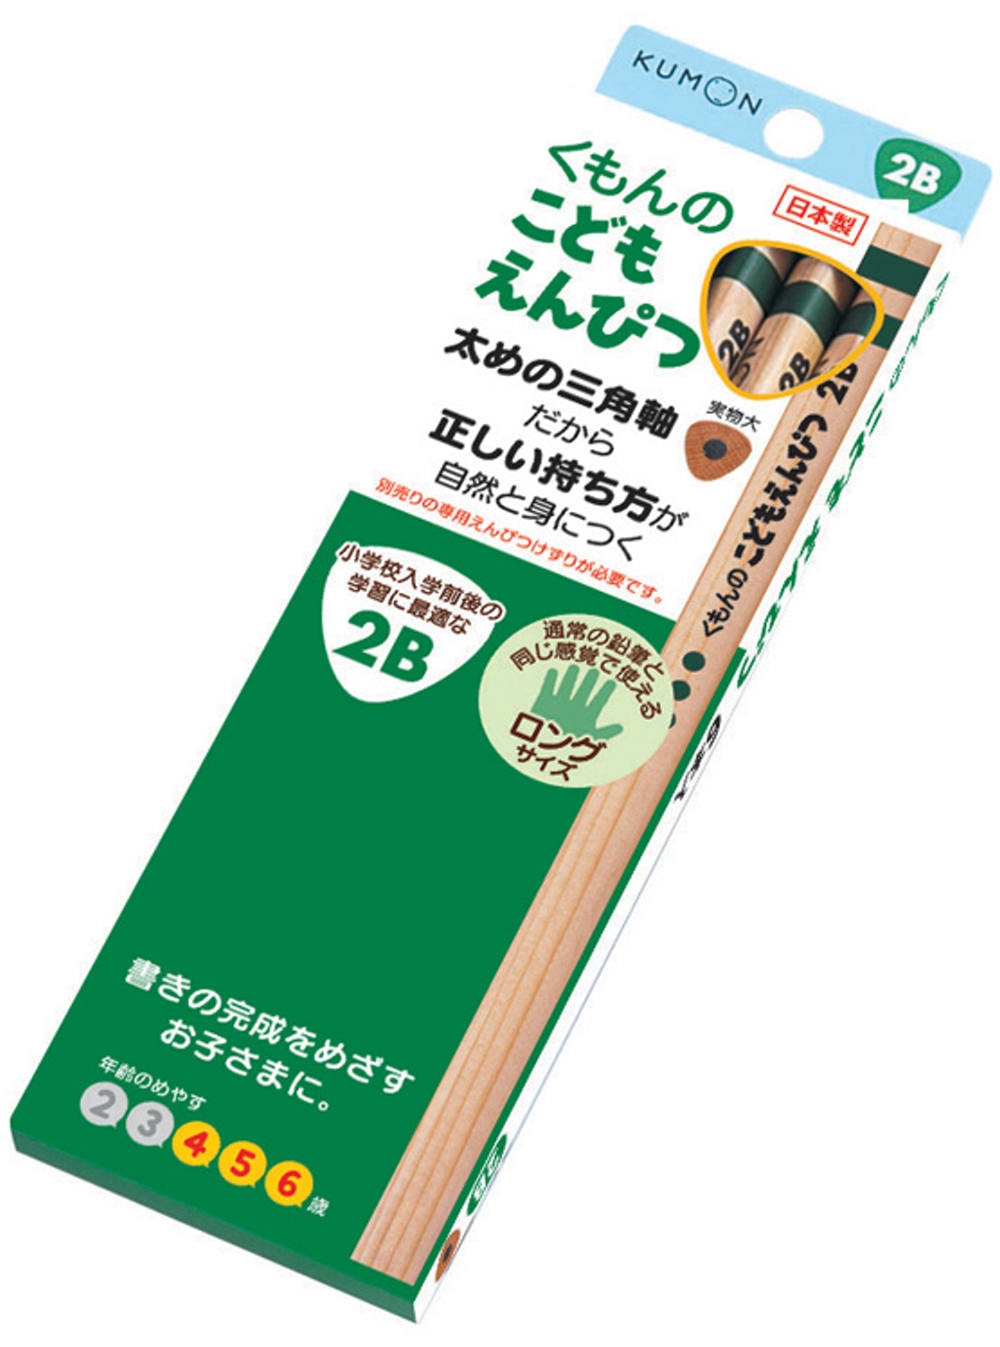 KUMON 日本製三角鉛筆2B (幼兒專用)